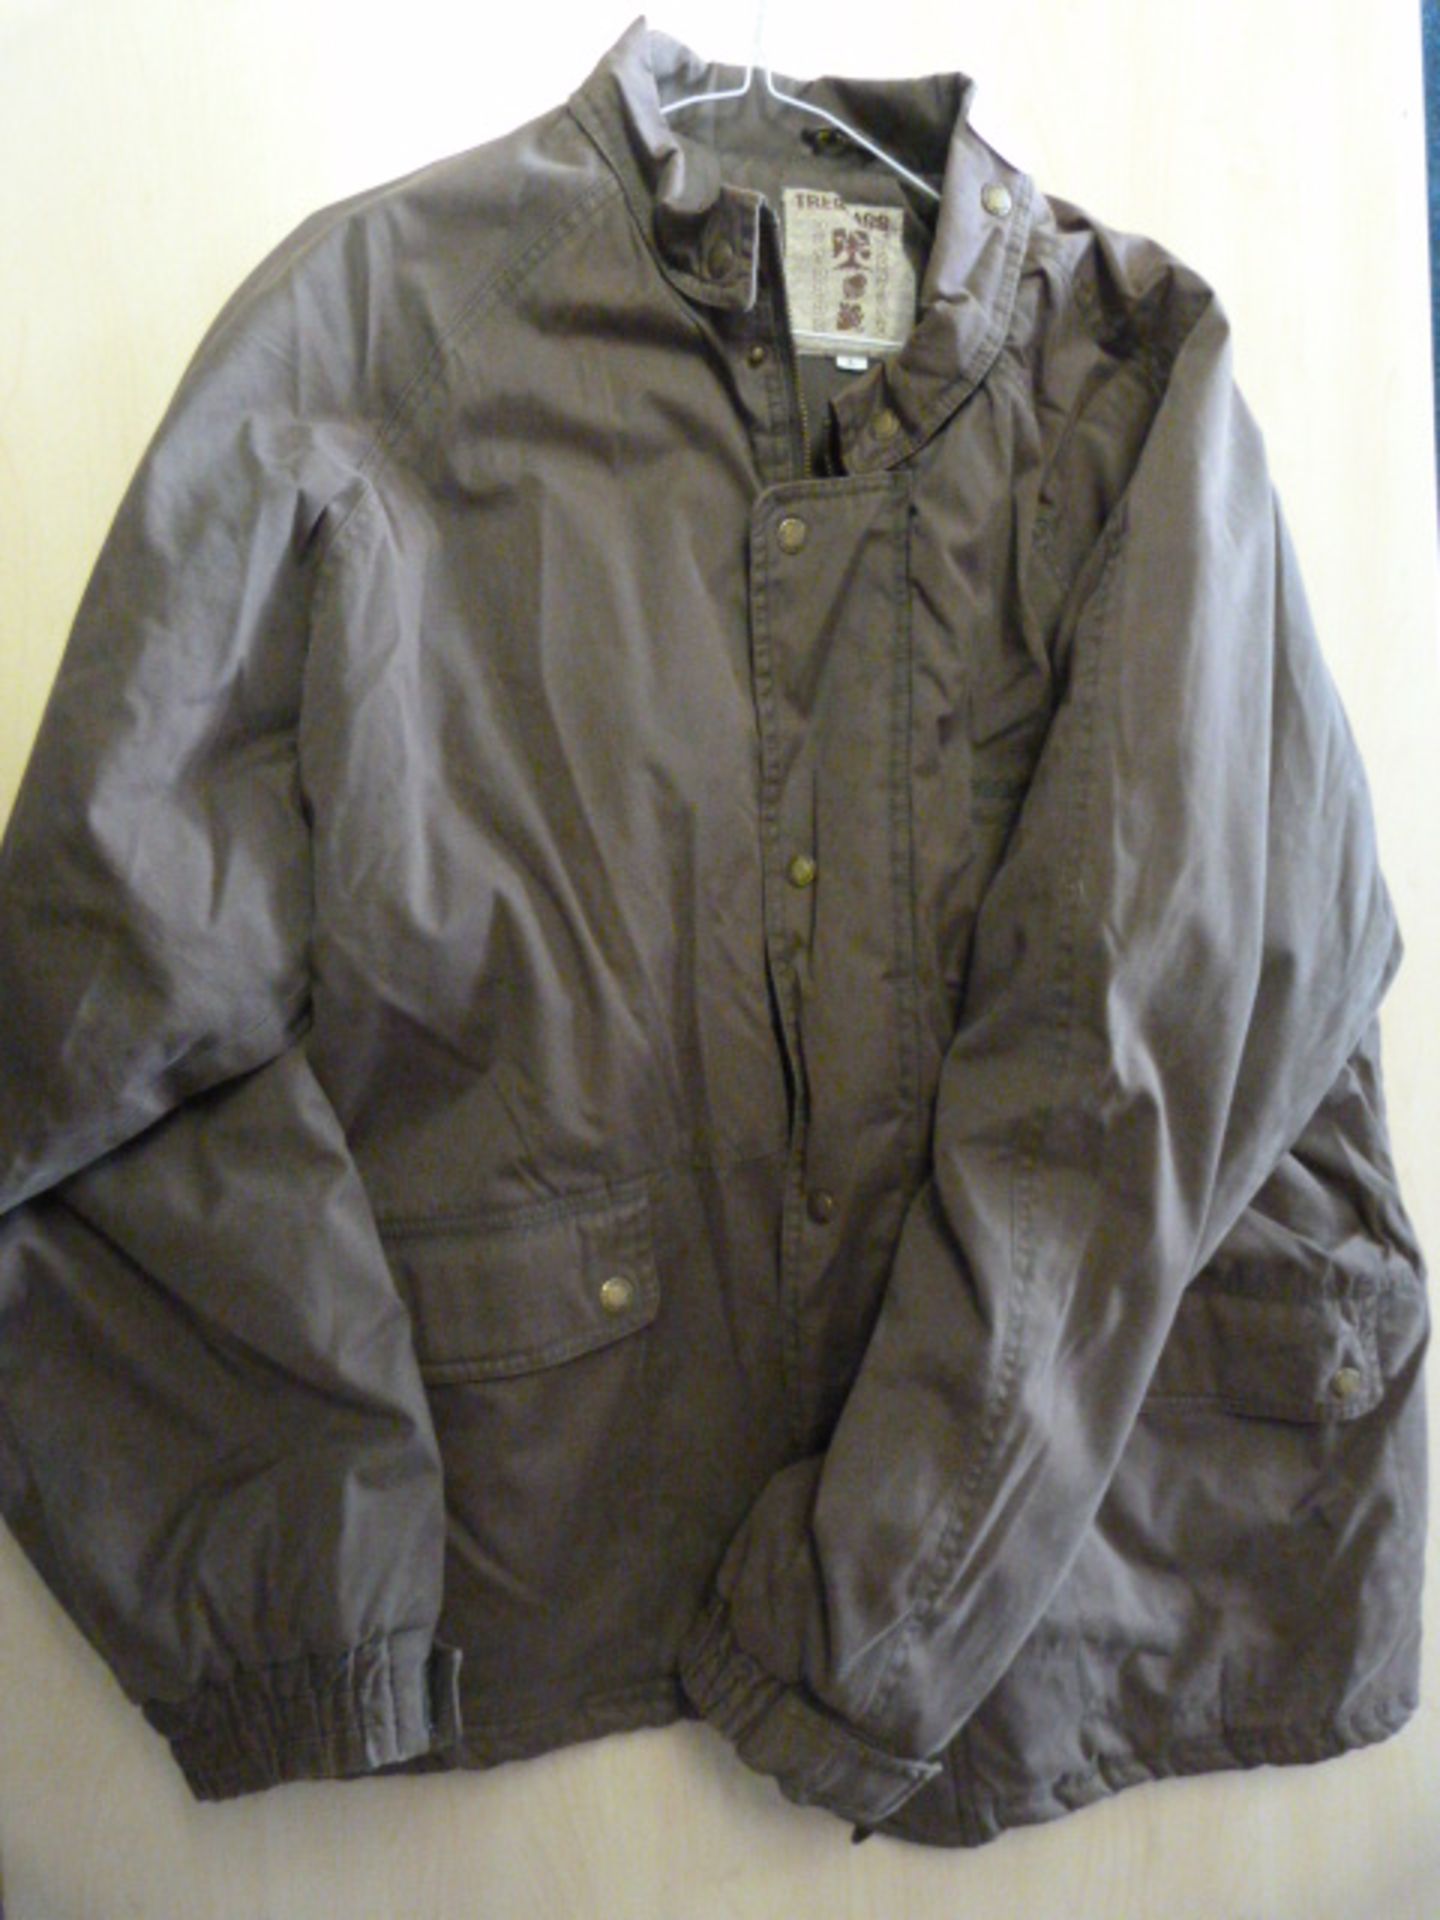 Trespass Outdoor Adventure Jacket Size: L